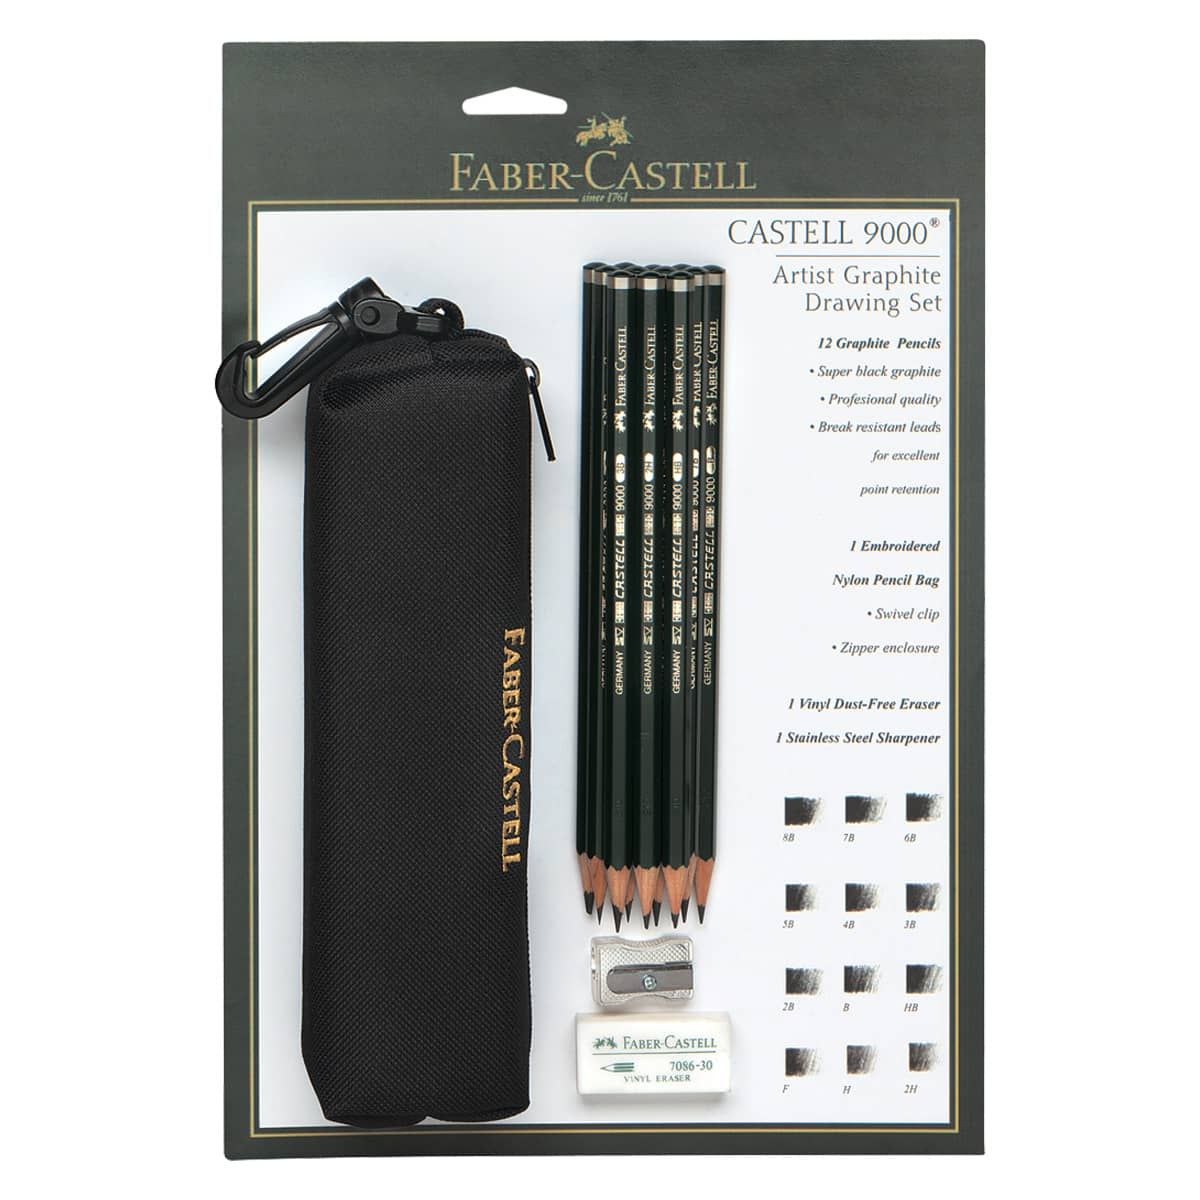 https://www.jerrysartarama.com/media/catalog/product/cache/ecb49a32eeb5603594b082bd5fe65733/a/r/artist-graphite-drawing-set-faber-castell-9000-pitt-graphite-pencil-sets-ls-v07001_1.jpg